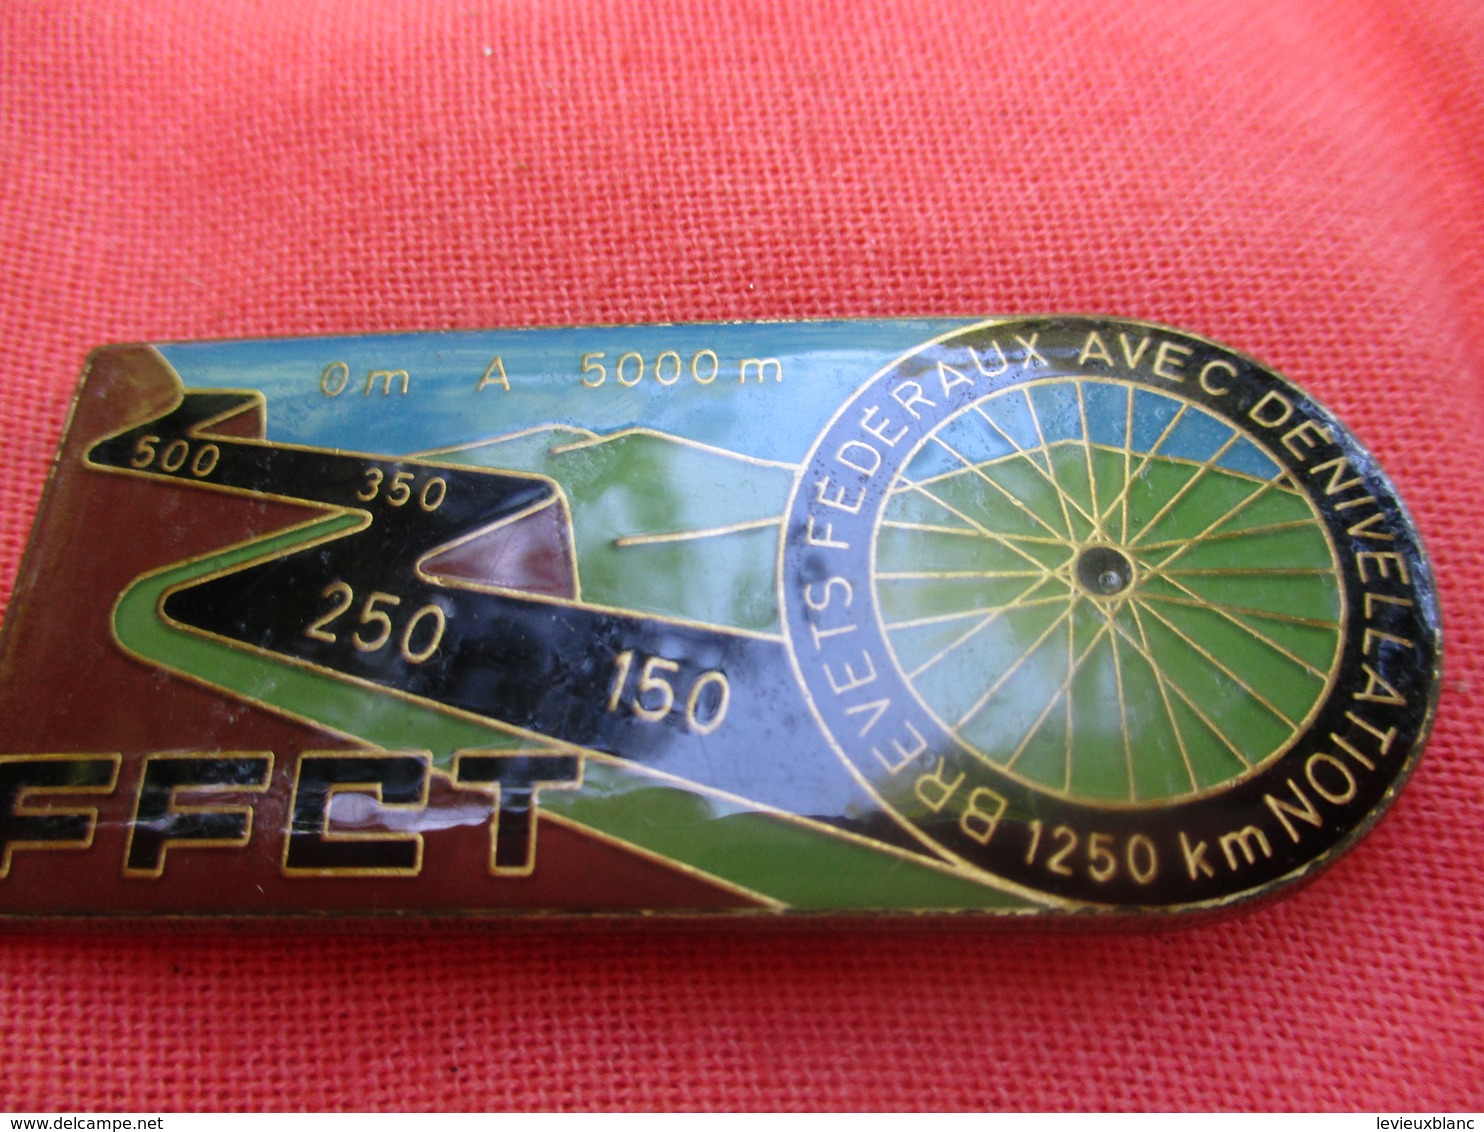 Médaille De Sport/Cyclisme/Brevets Federaux Avec Dénivellation/1250 Km /Beraudy 63 AMBERT/vers 1980-90      SPO298 - Radsport